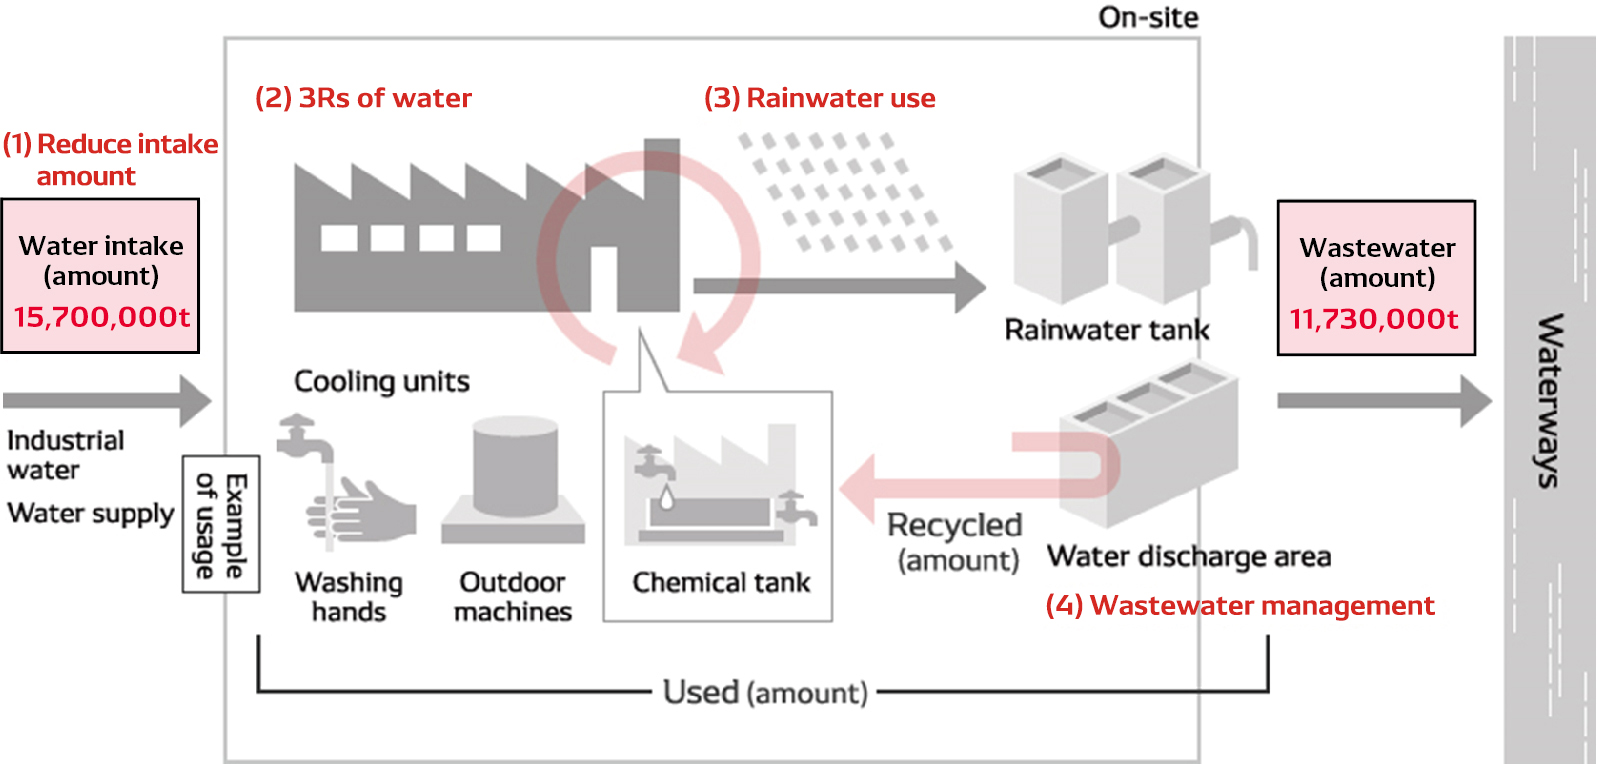 environment-data-img-water-management-en